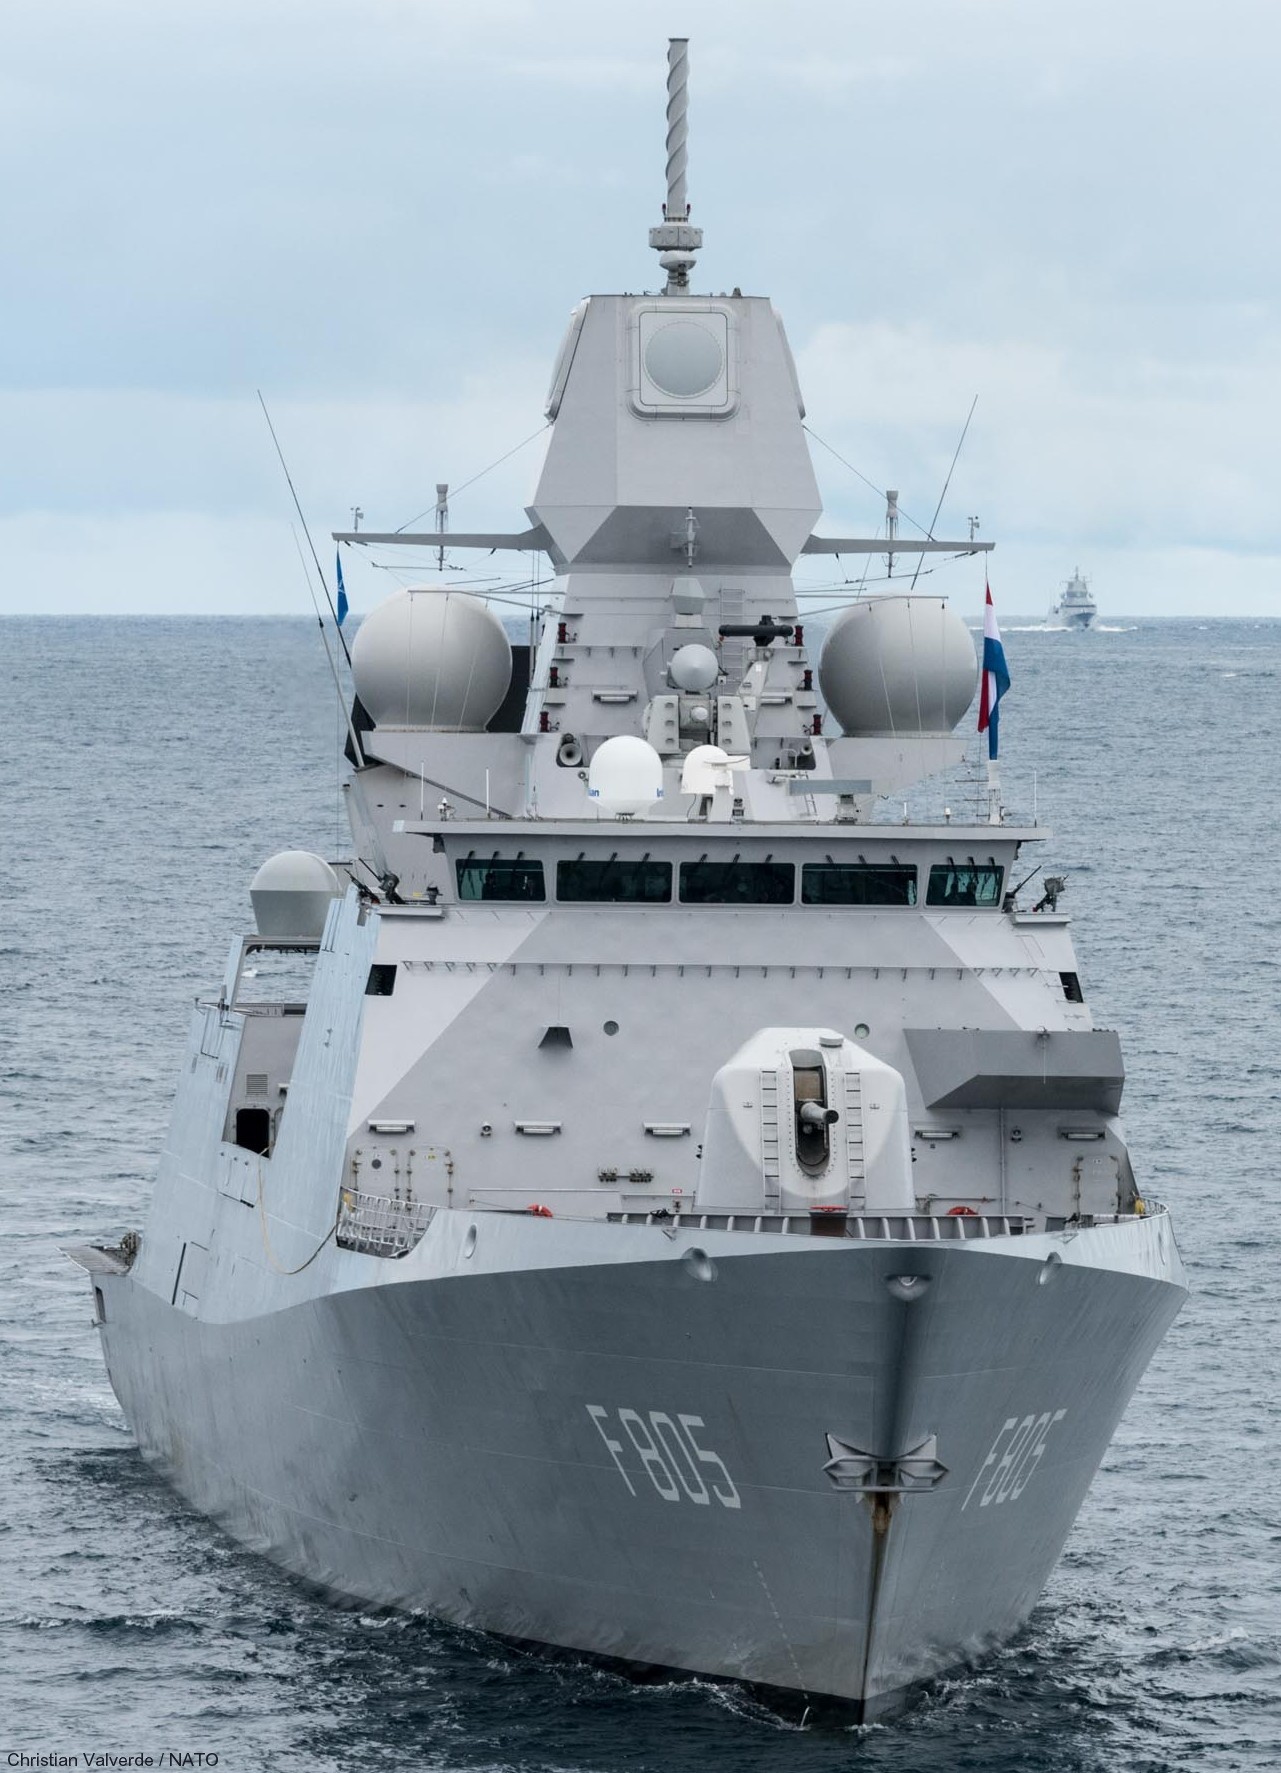 f-805 hnlms evertsen guided missile frigate ffg lcf royal netherlands navy 34